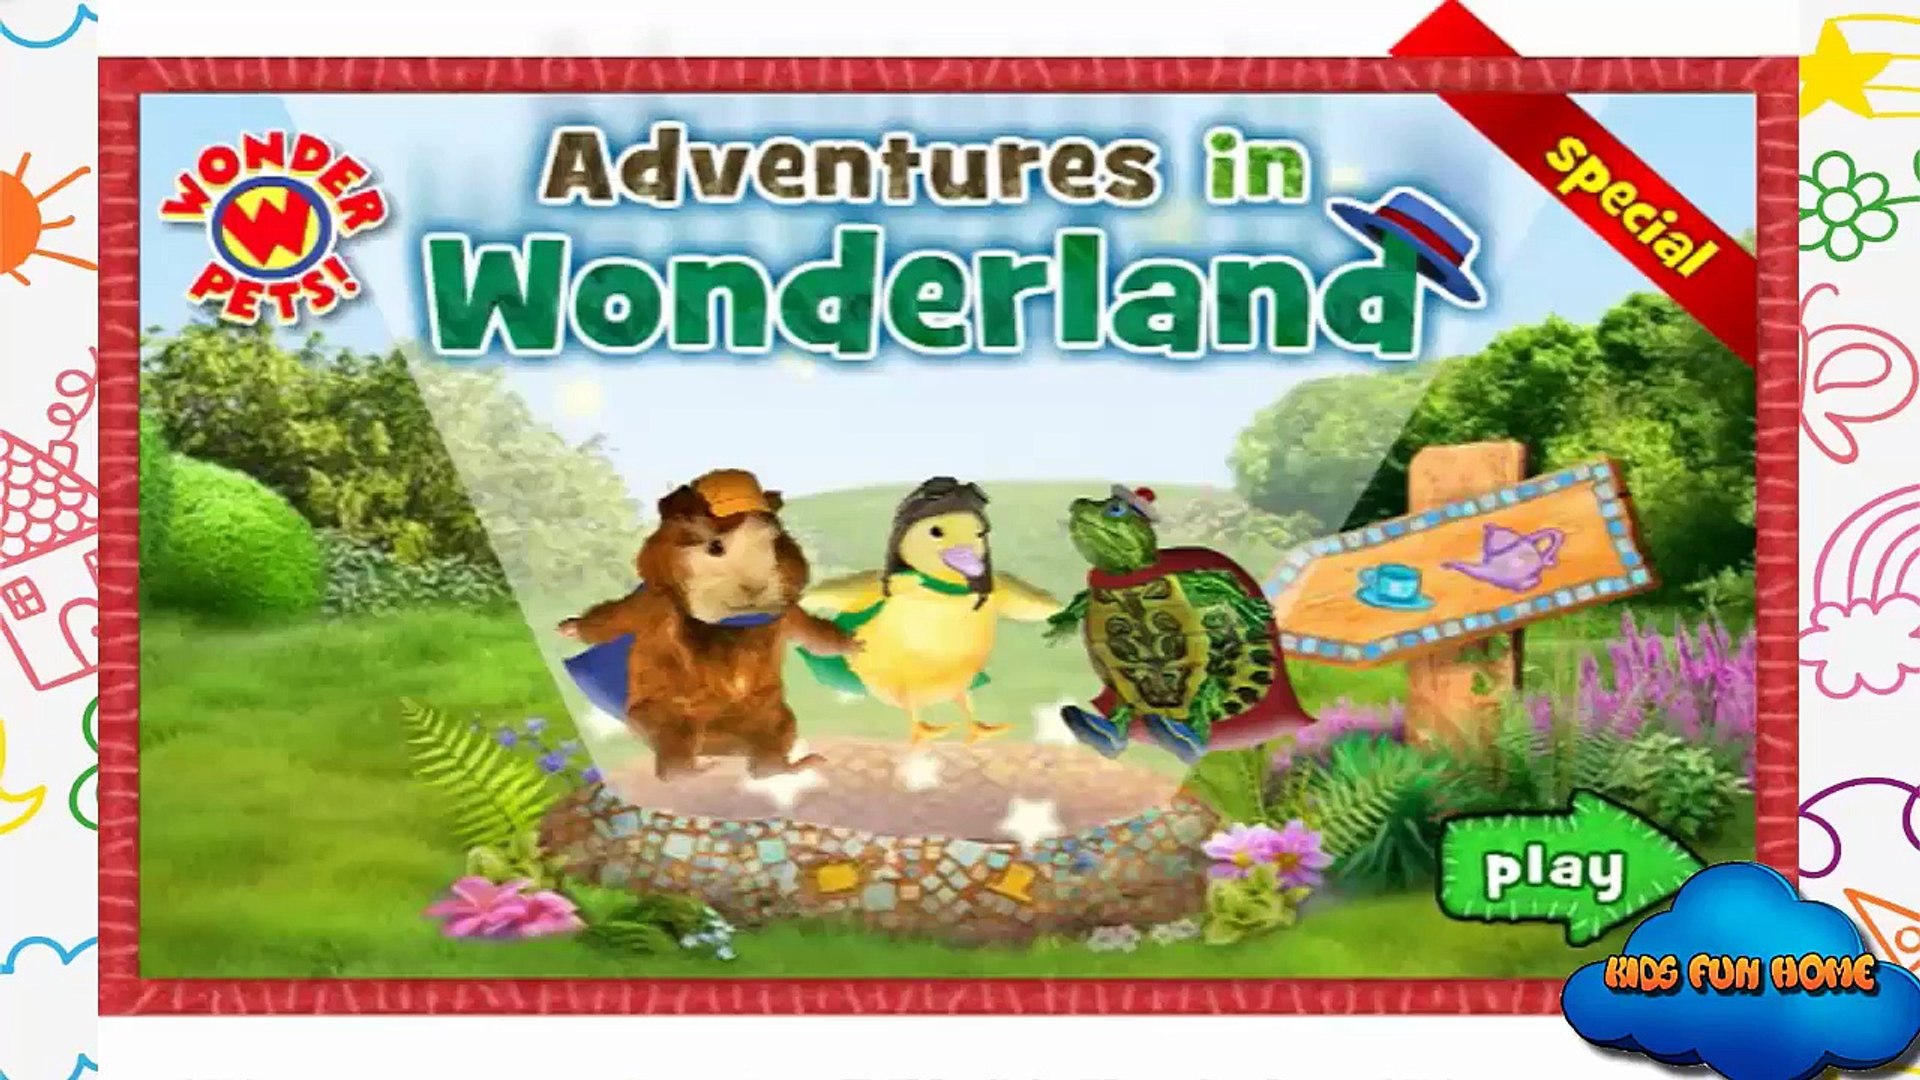 Wonder Pets: Phone Game : Nick Jr. : Free Download, Borrow, and